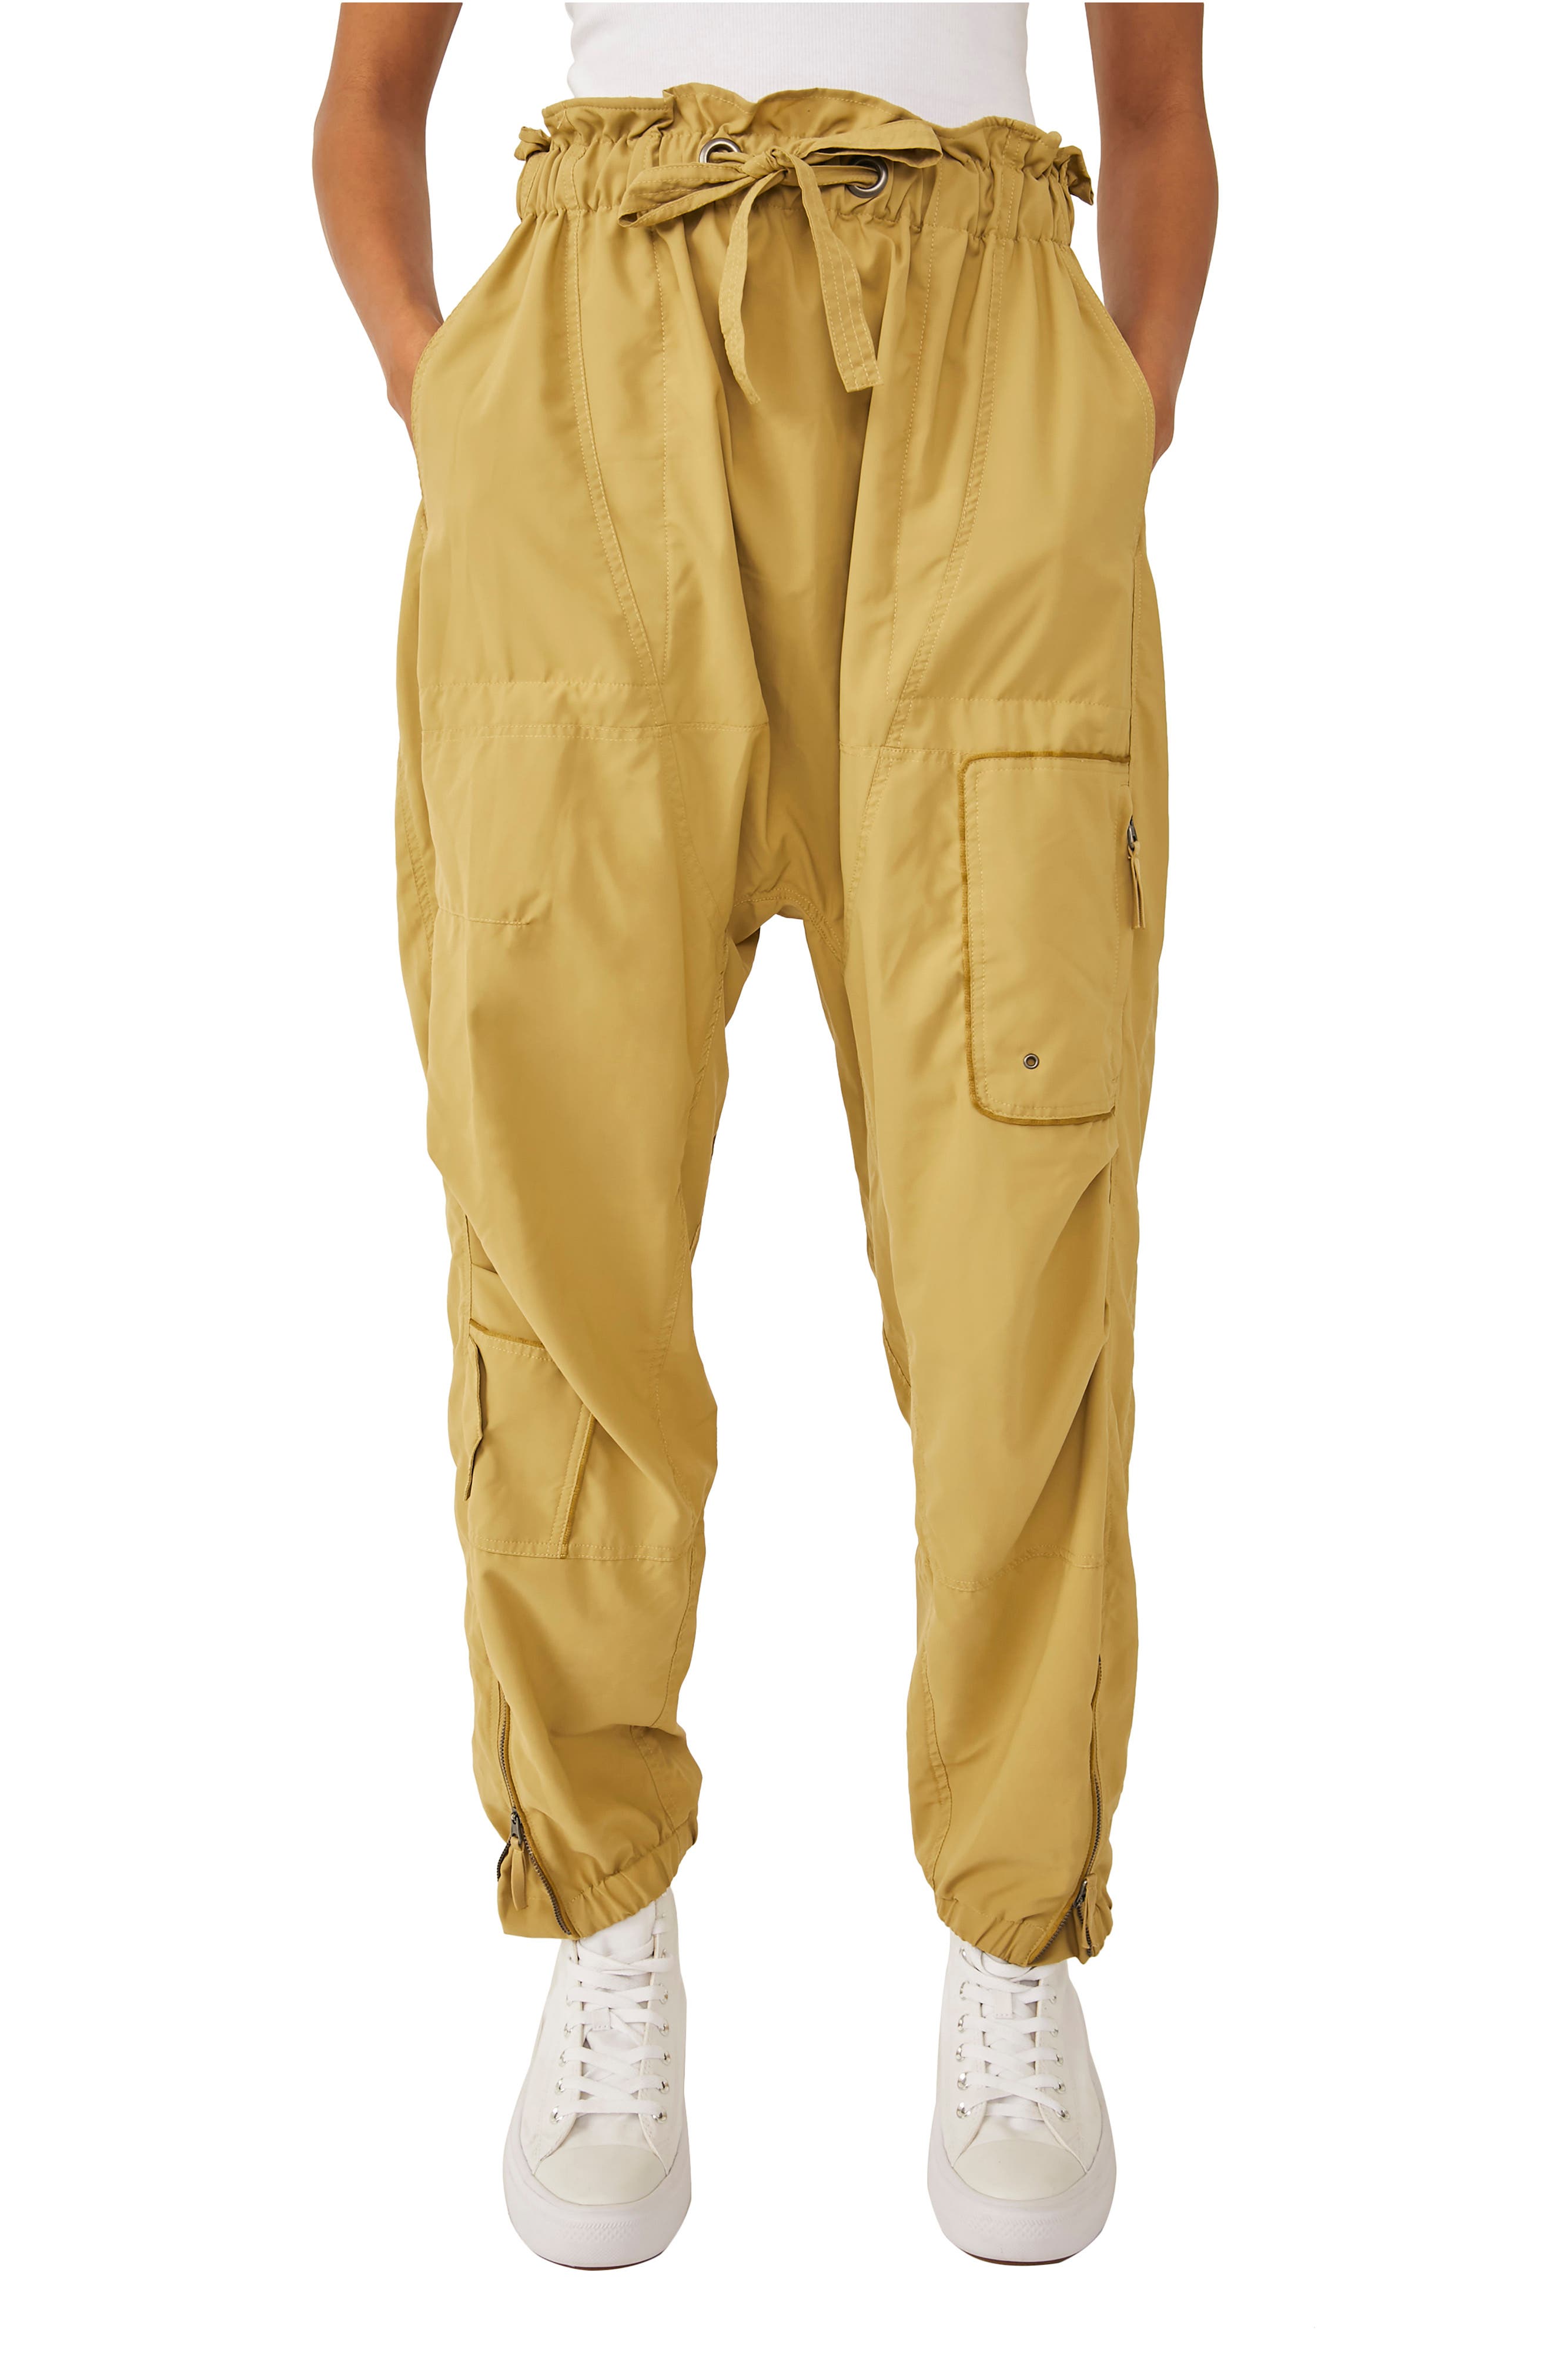 Coolred-Men Trousers Plus Size Basic Style Cotton Linen Training Pant 